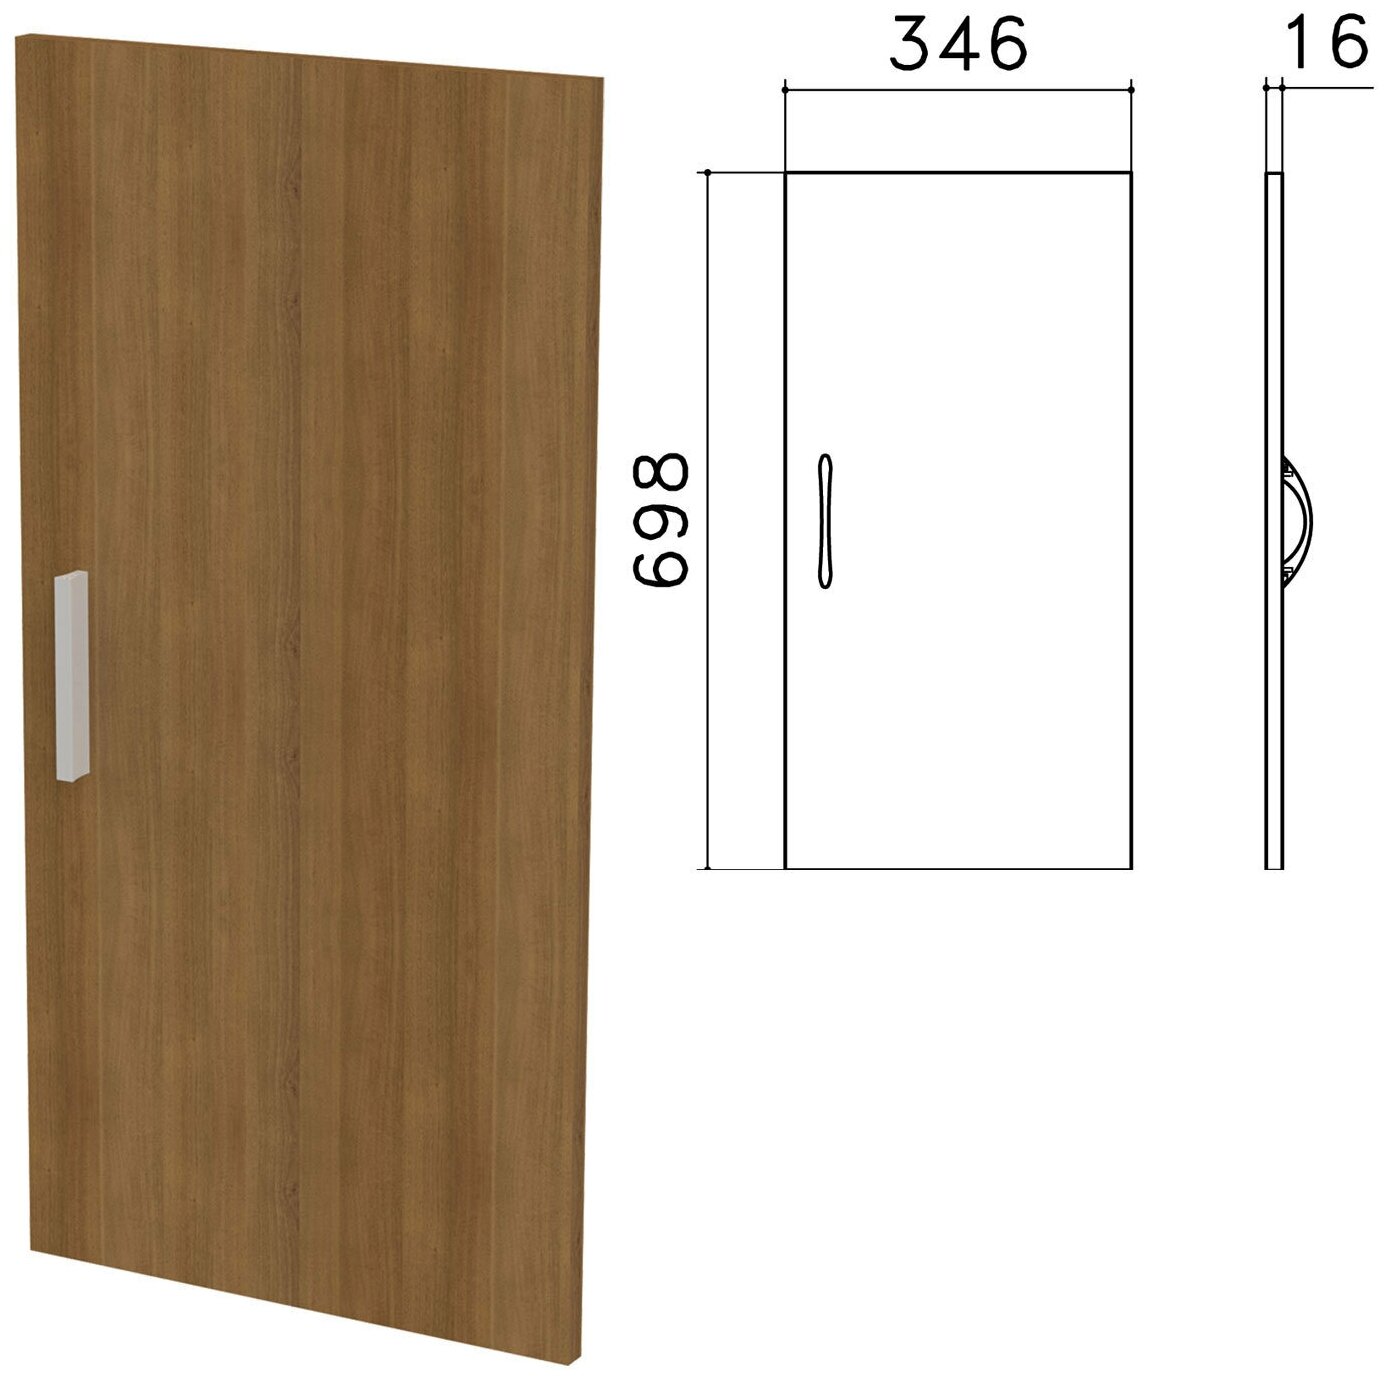 Дверь ЛДСП низкая "Канц", 346х16х698 мм, цвет орех пирамидальный, ДК32.9